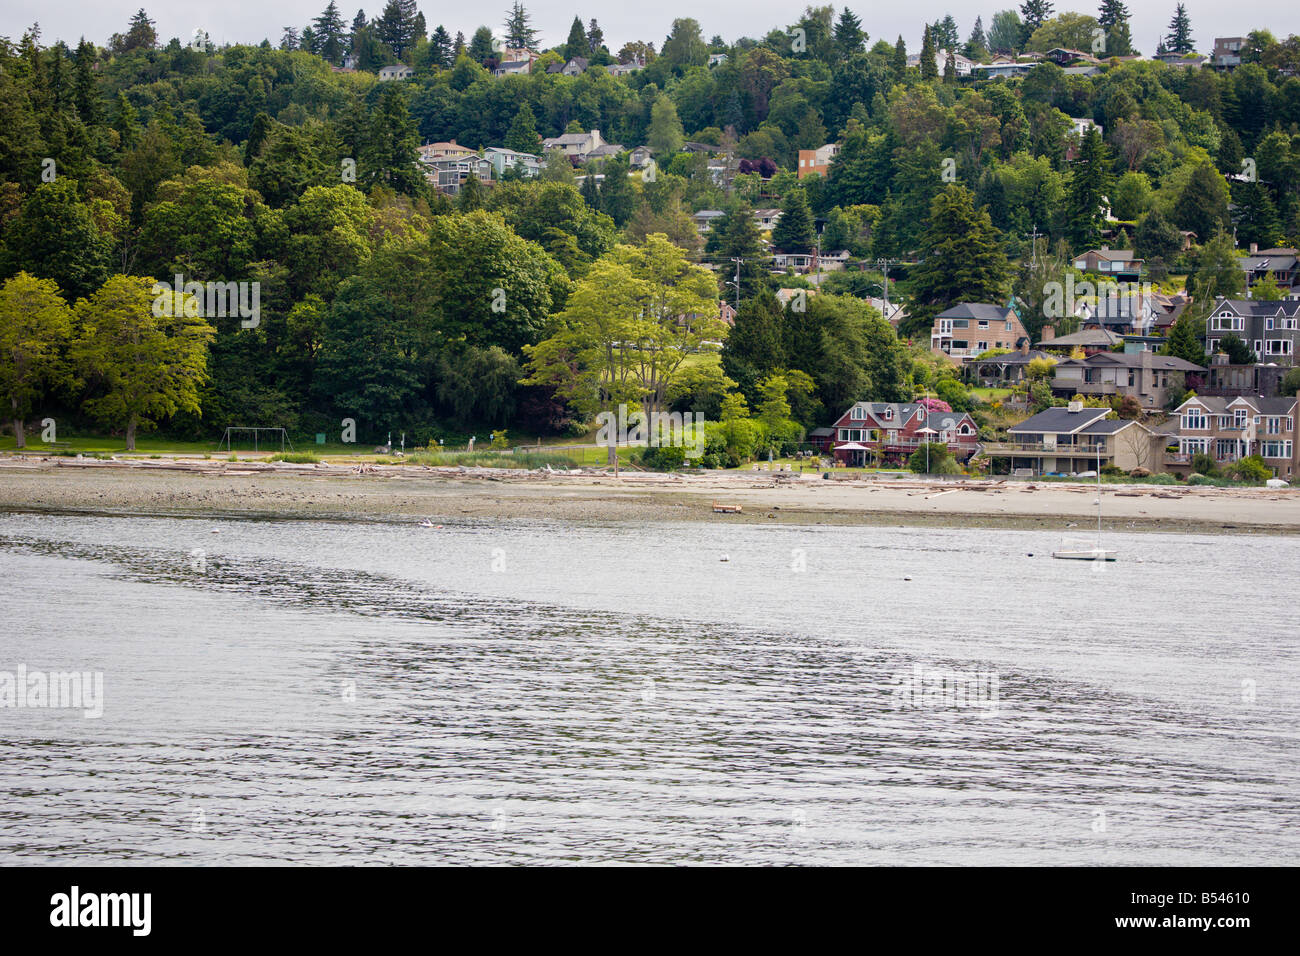 Residential hill on Puget Sound near Seattle, Washington, USA Stock Photo